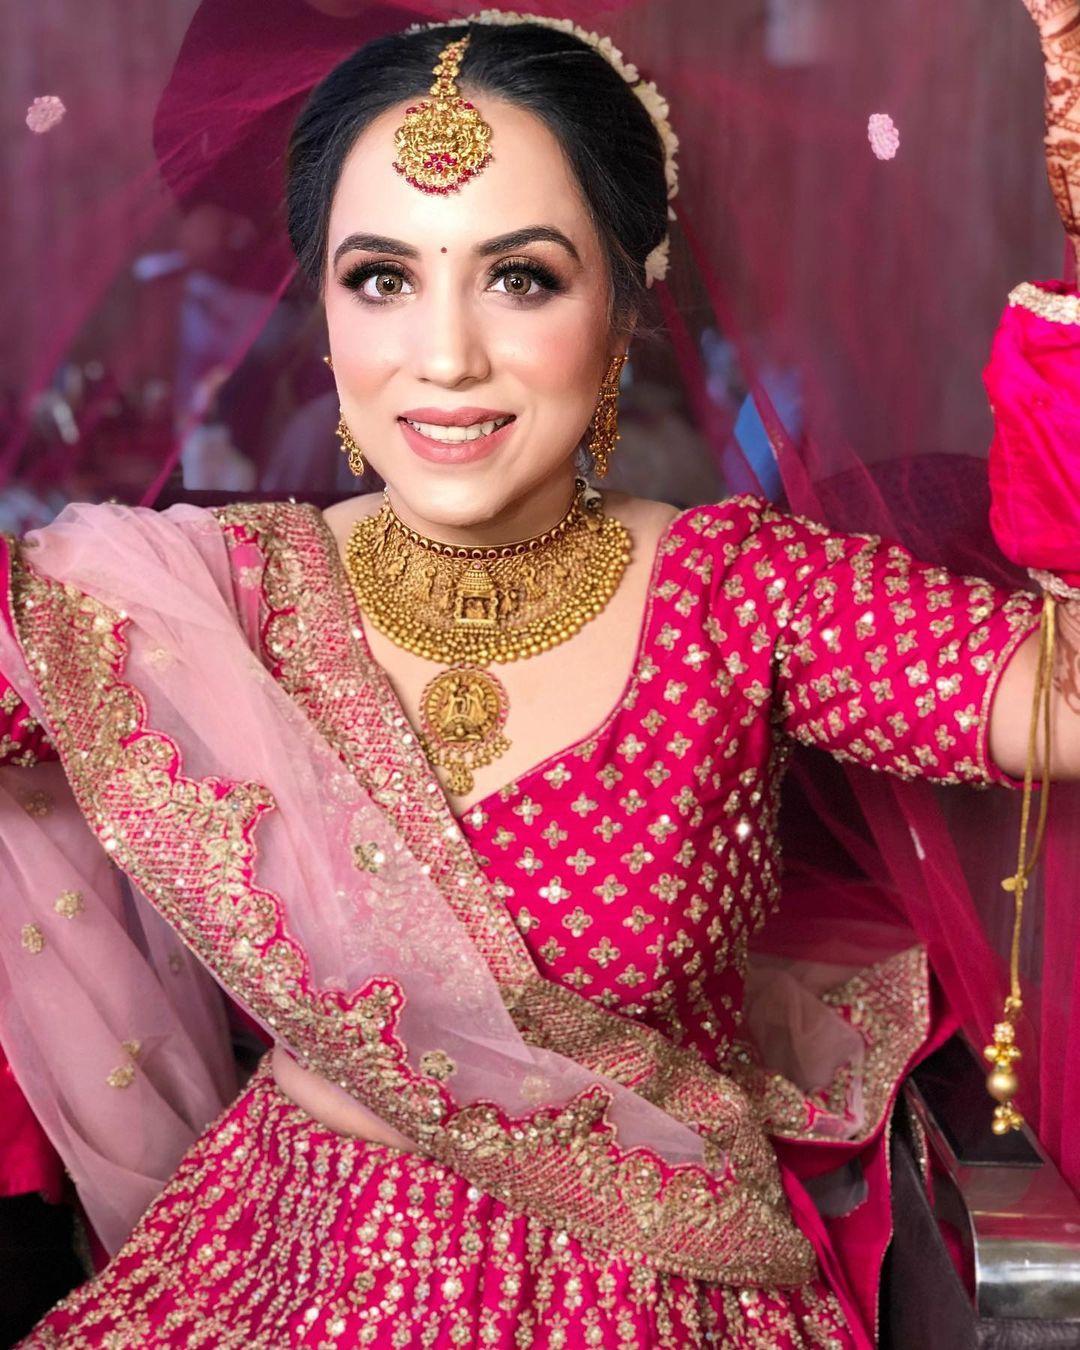 Bridal Eye Makeup: Explore Wedding Eye Makeup Looks | SUGAR Cosmetics